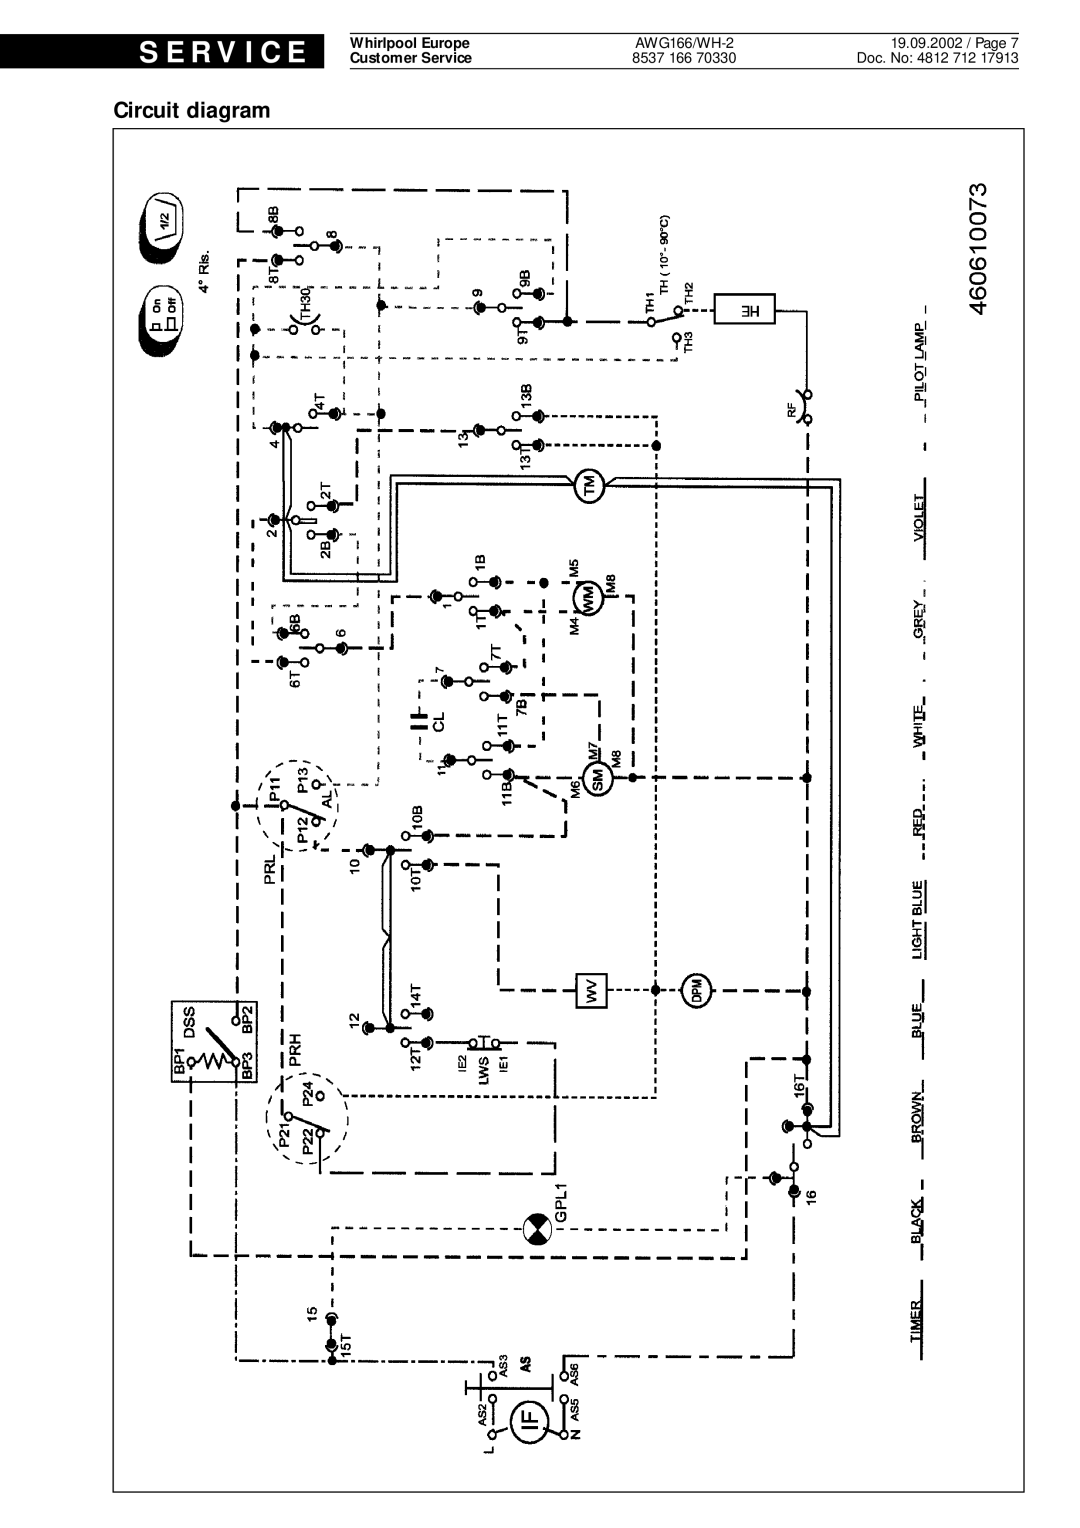 Whirlpool AWG166 WH-2 service manual Circuit diagram, S E R V I C E, AWG166/WH-2 